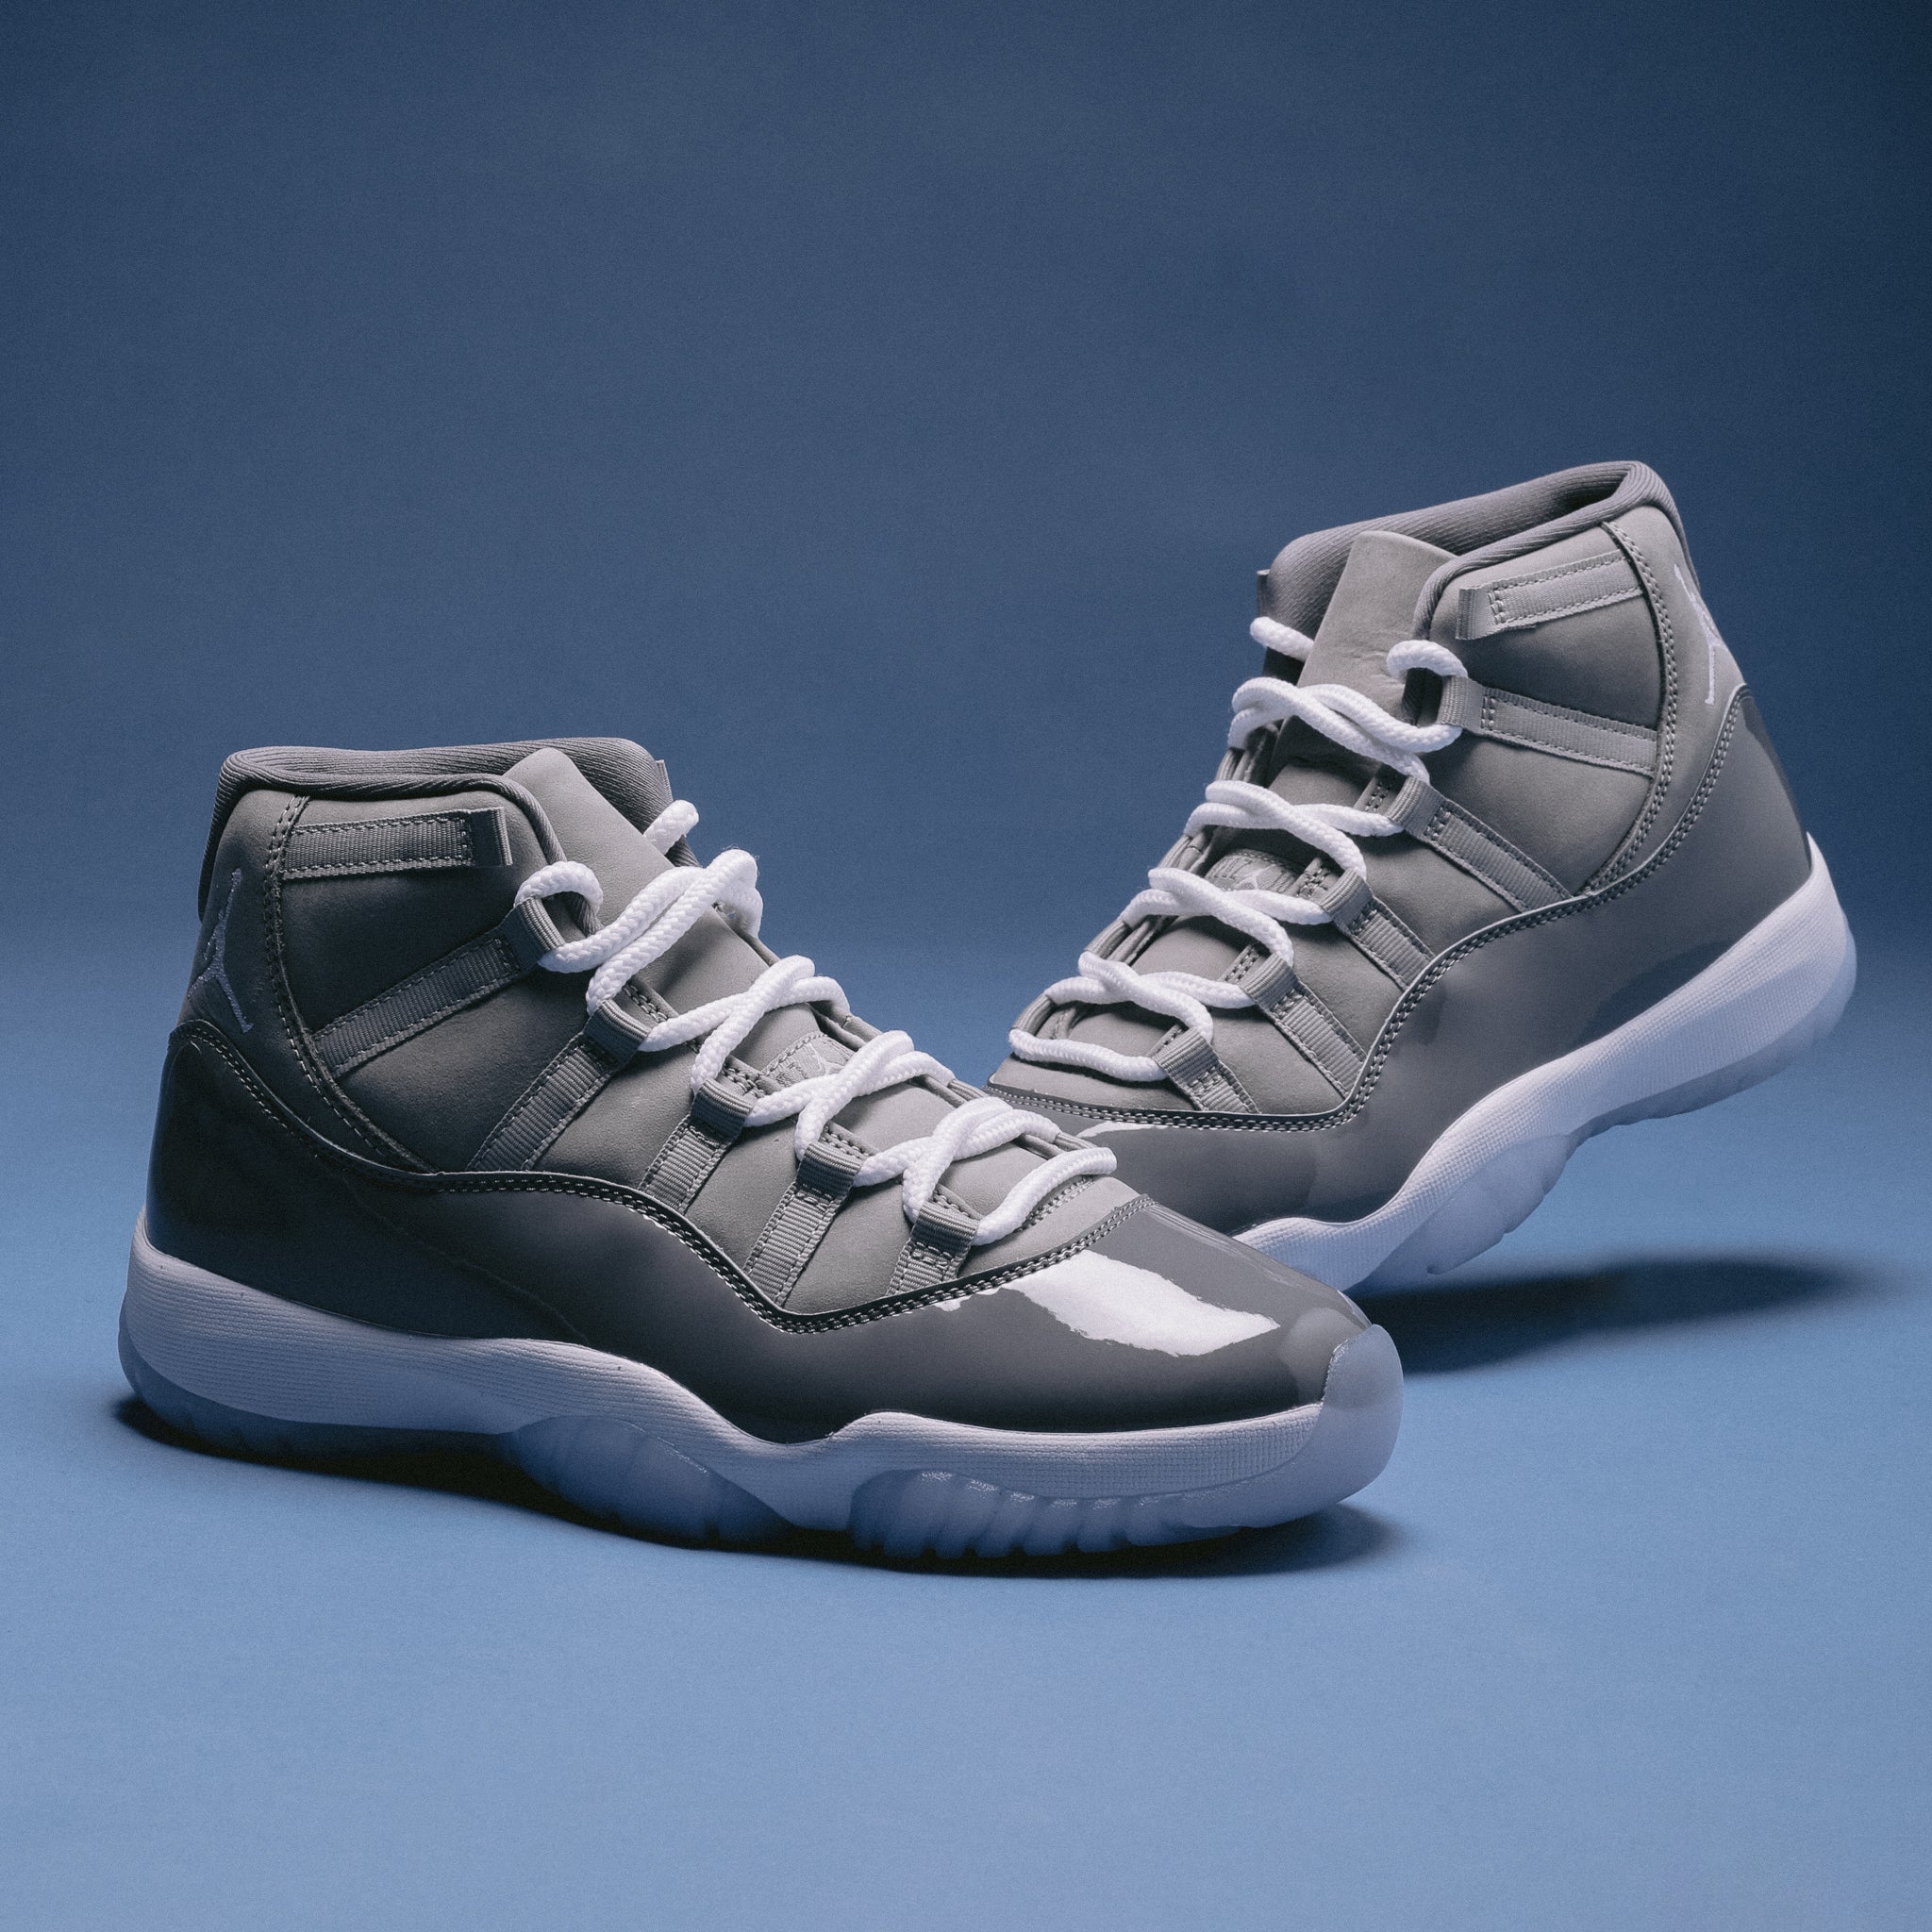 Nike Jordan 11 Retro “Cool Grey” – The Darkside Initiative